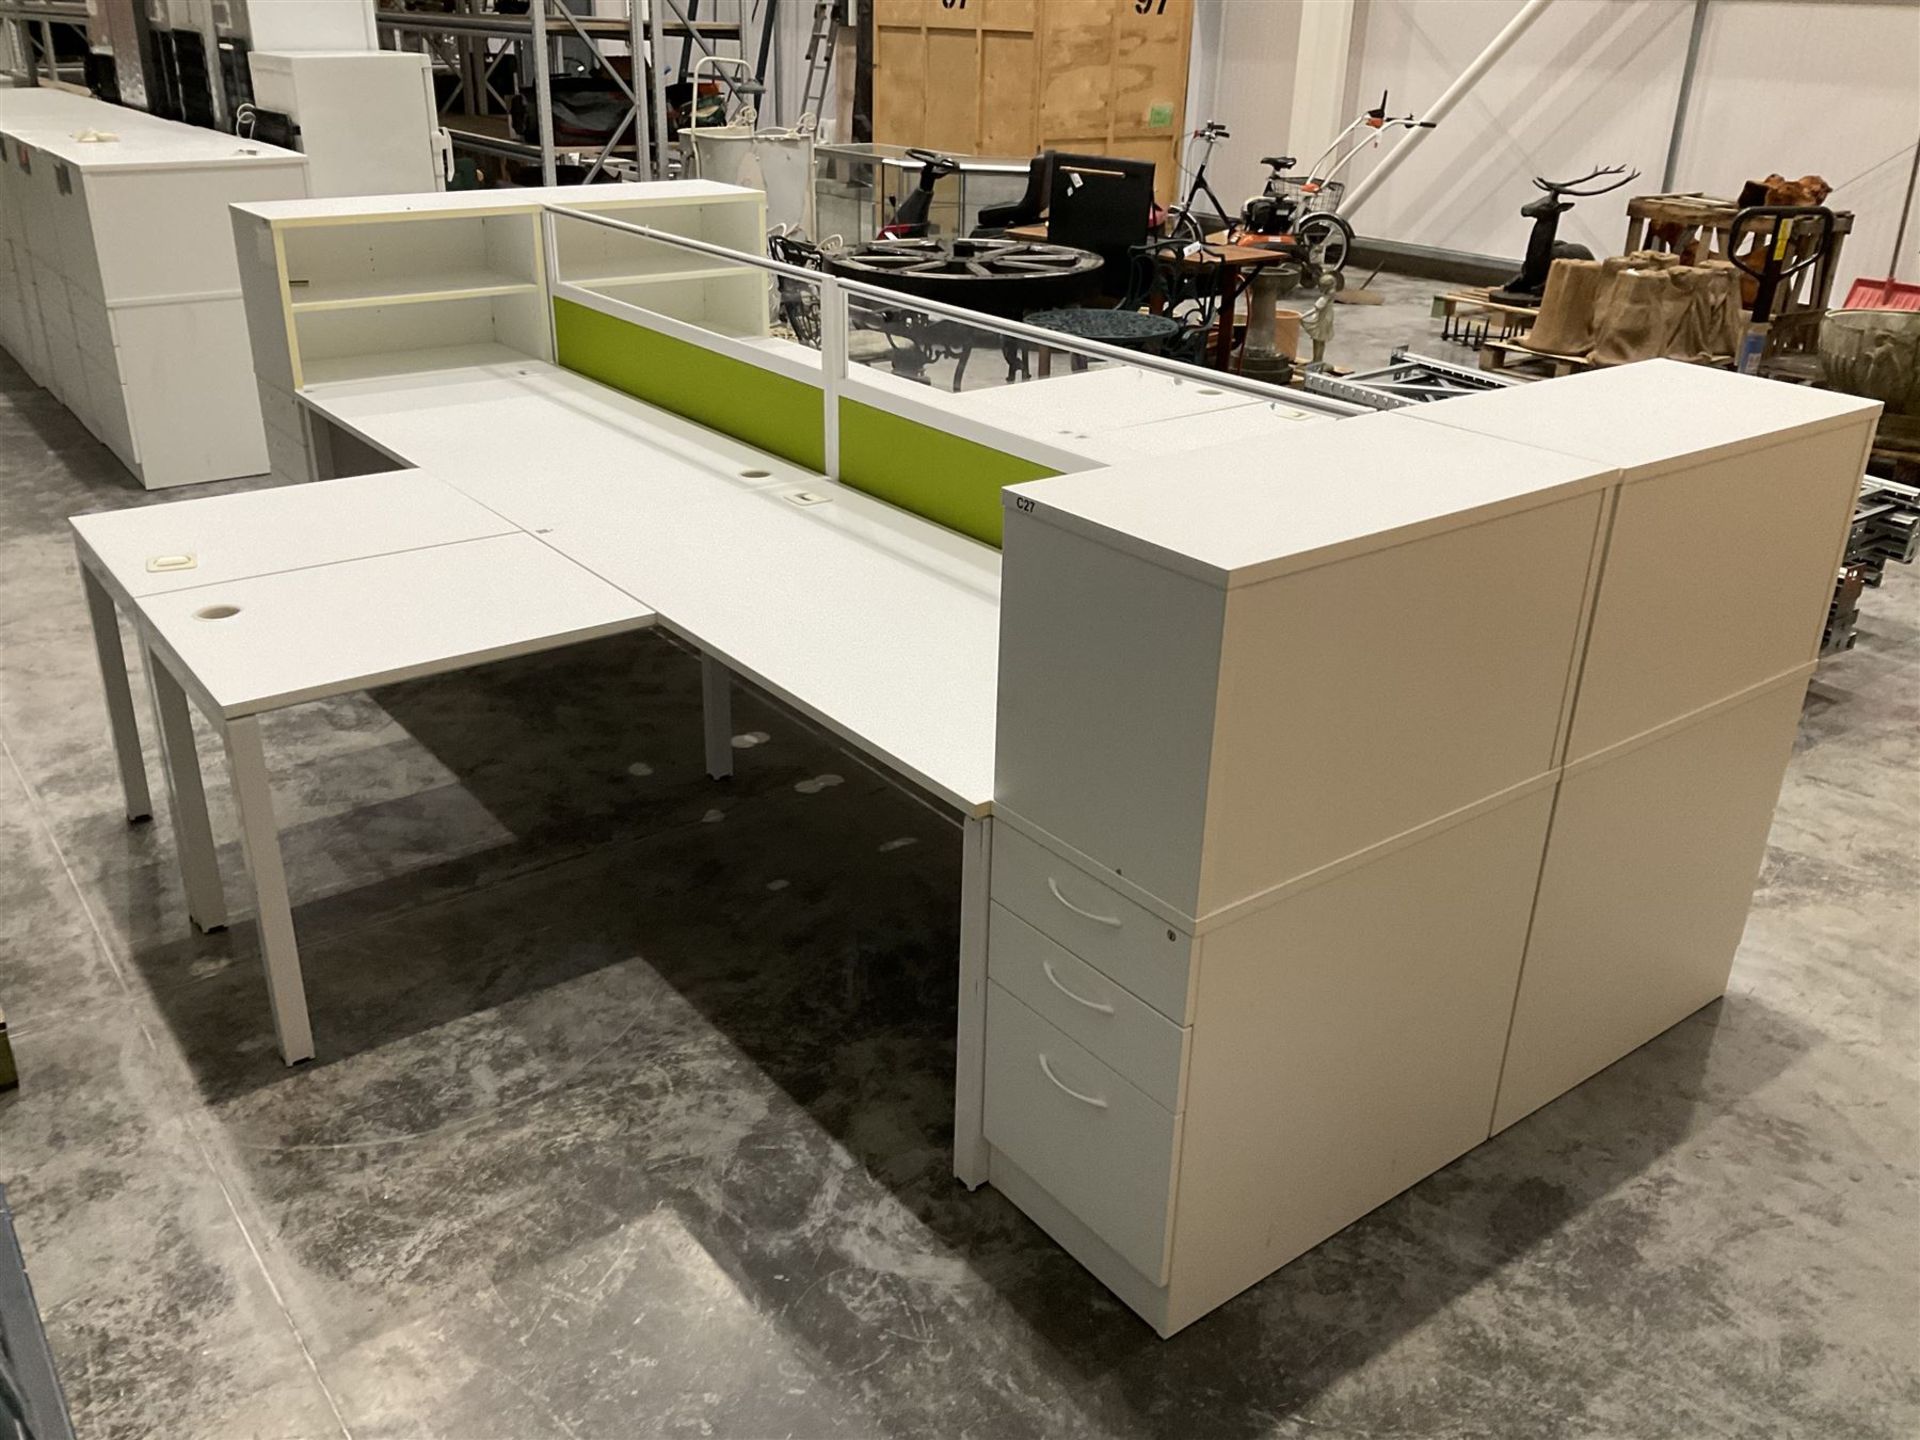 Modular two desk office system - comprising two desks - Image 2 of 4